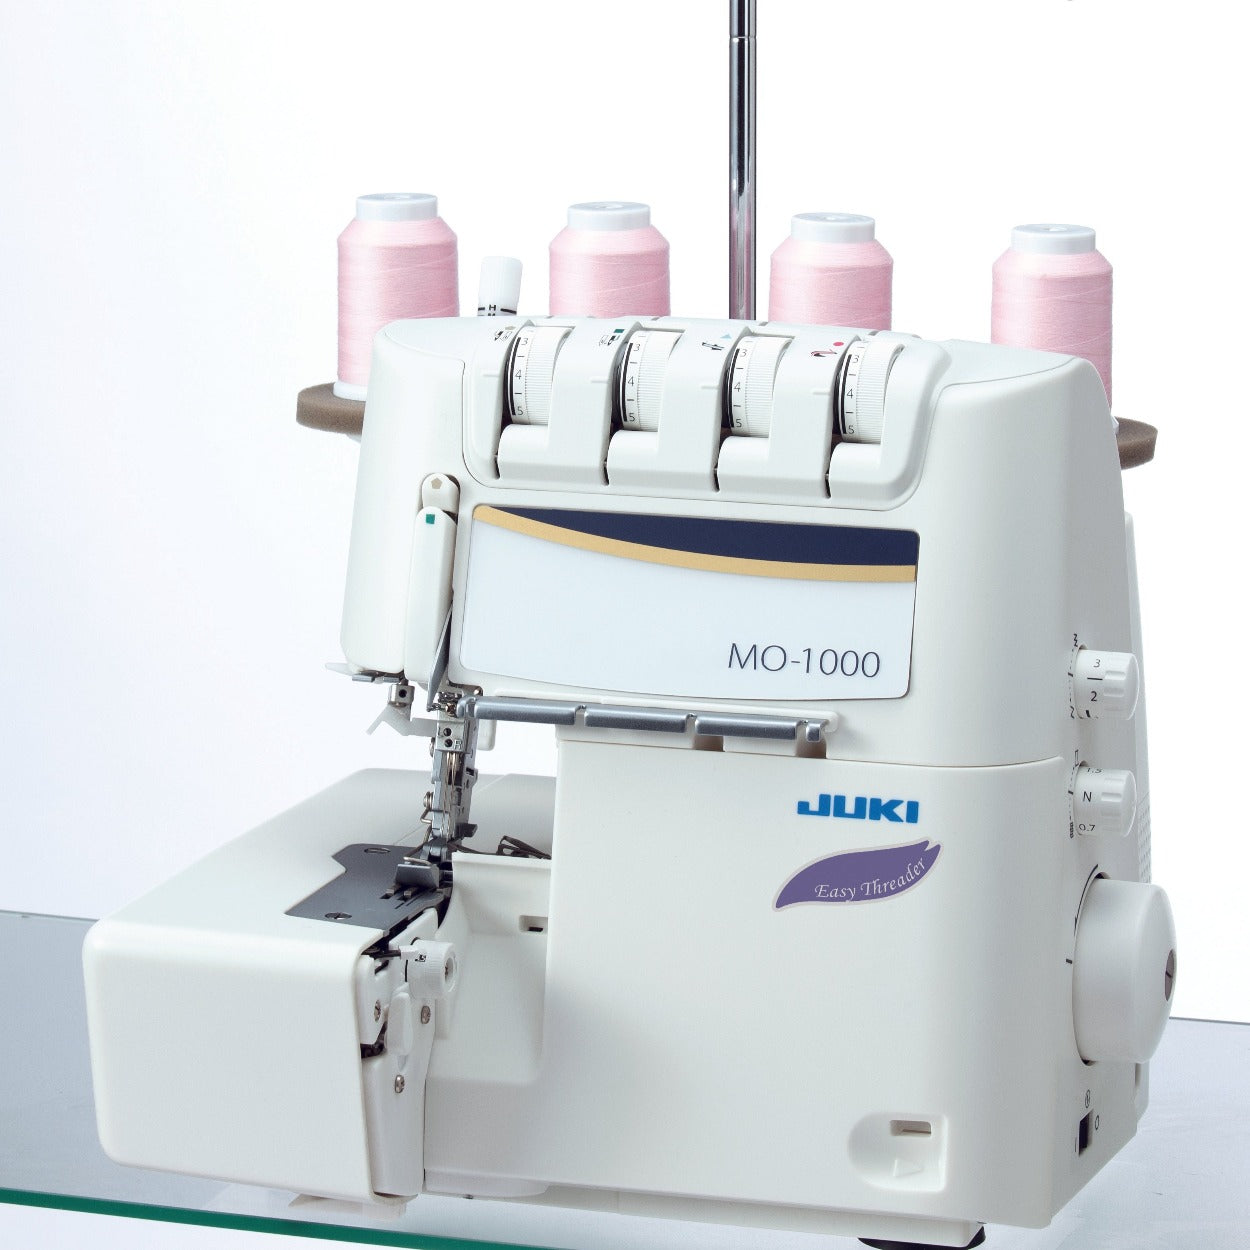 Juki MO-1000 Air Thread Overlocker - Save £200 ! from Jaycotts Sewing Supplies